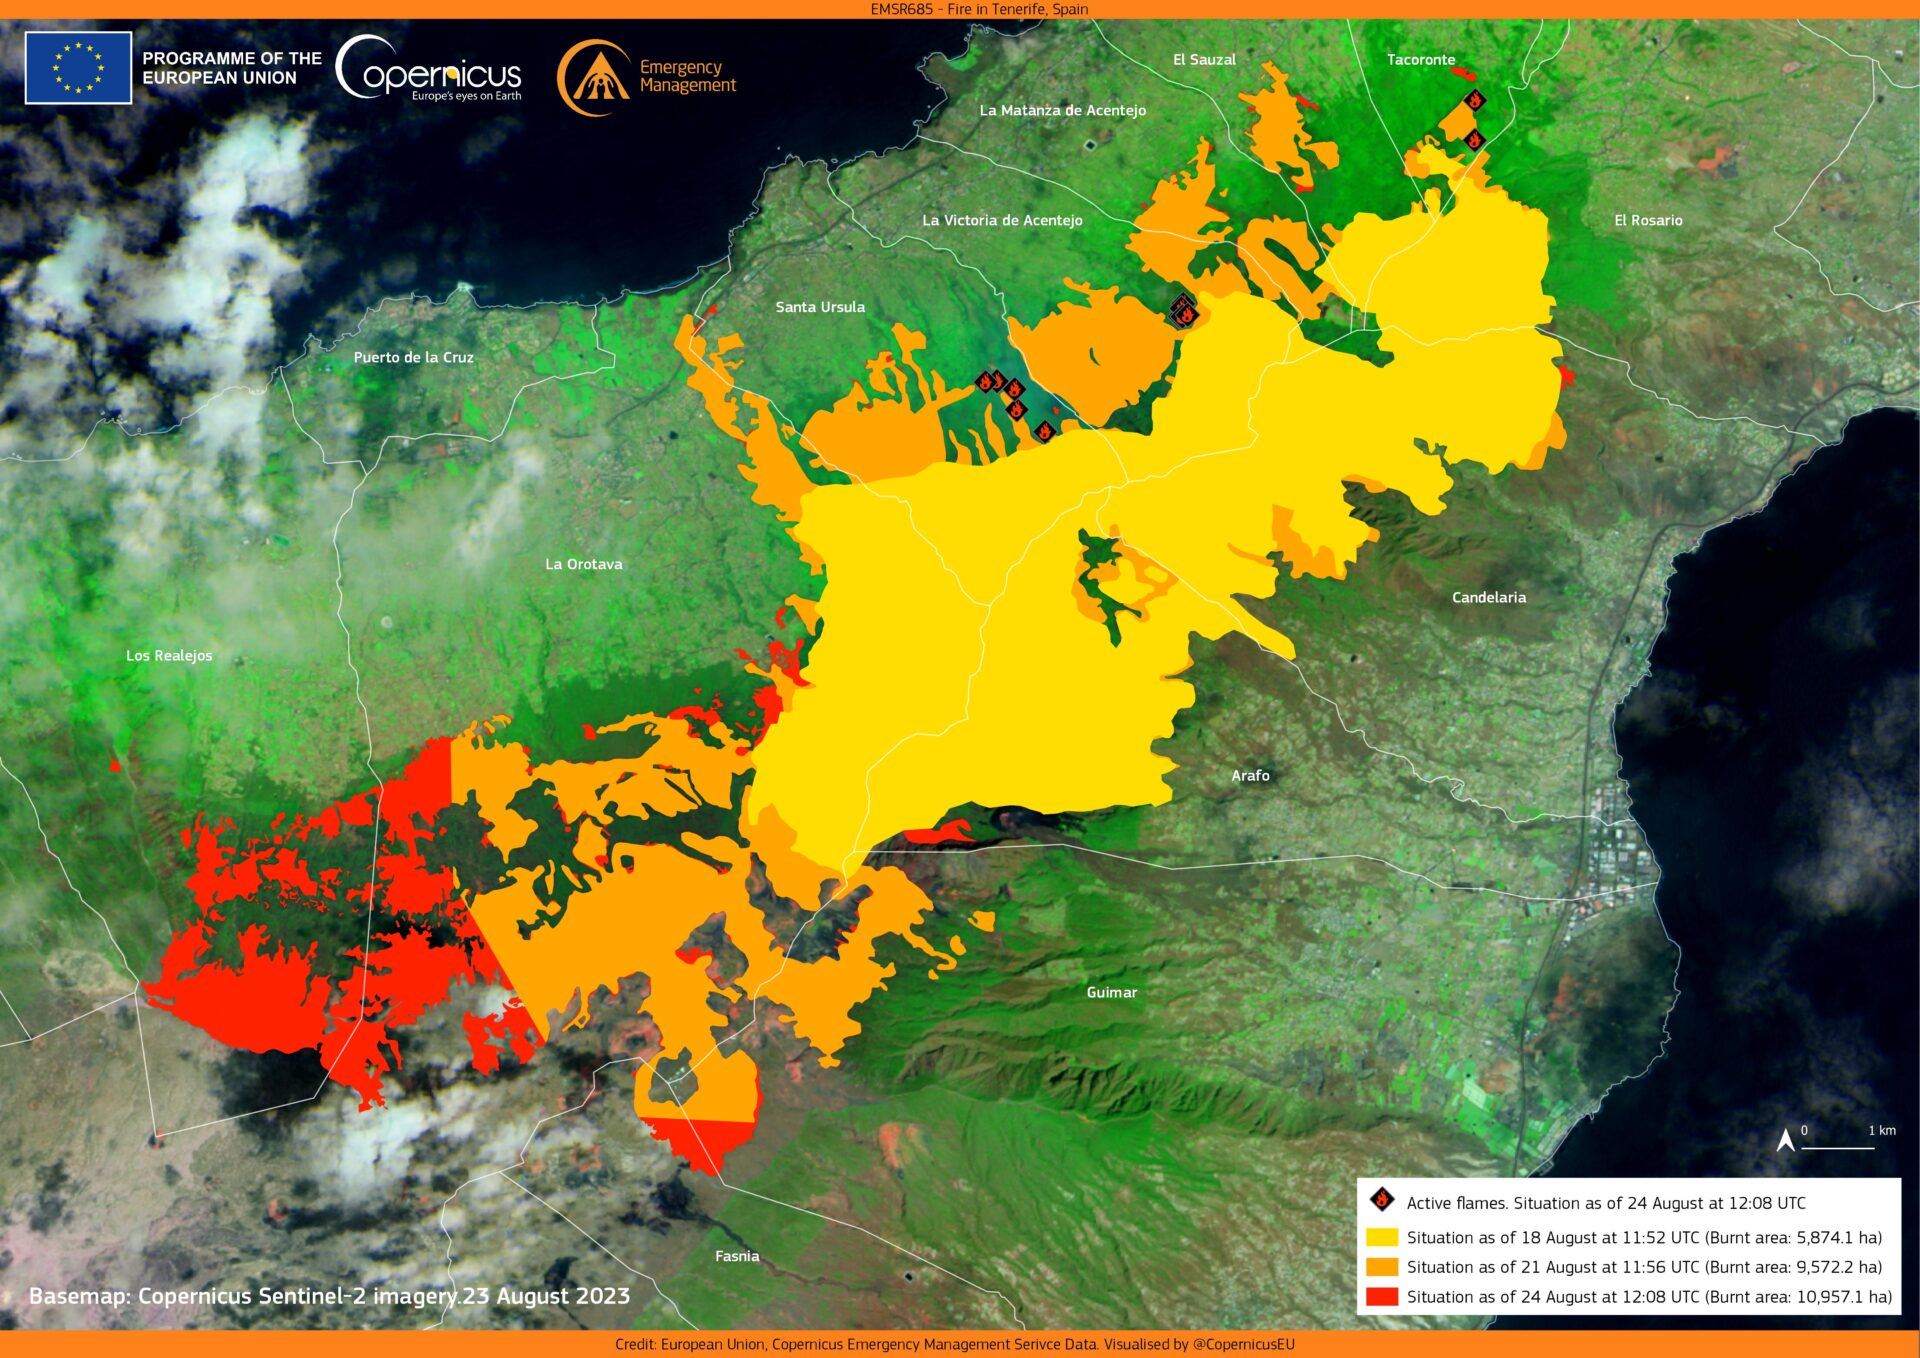 Location: Tenerife, Spain Credit: European Union, Copernicus Emergency Management Service Data